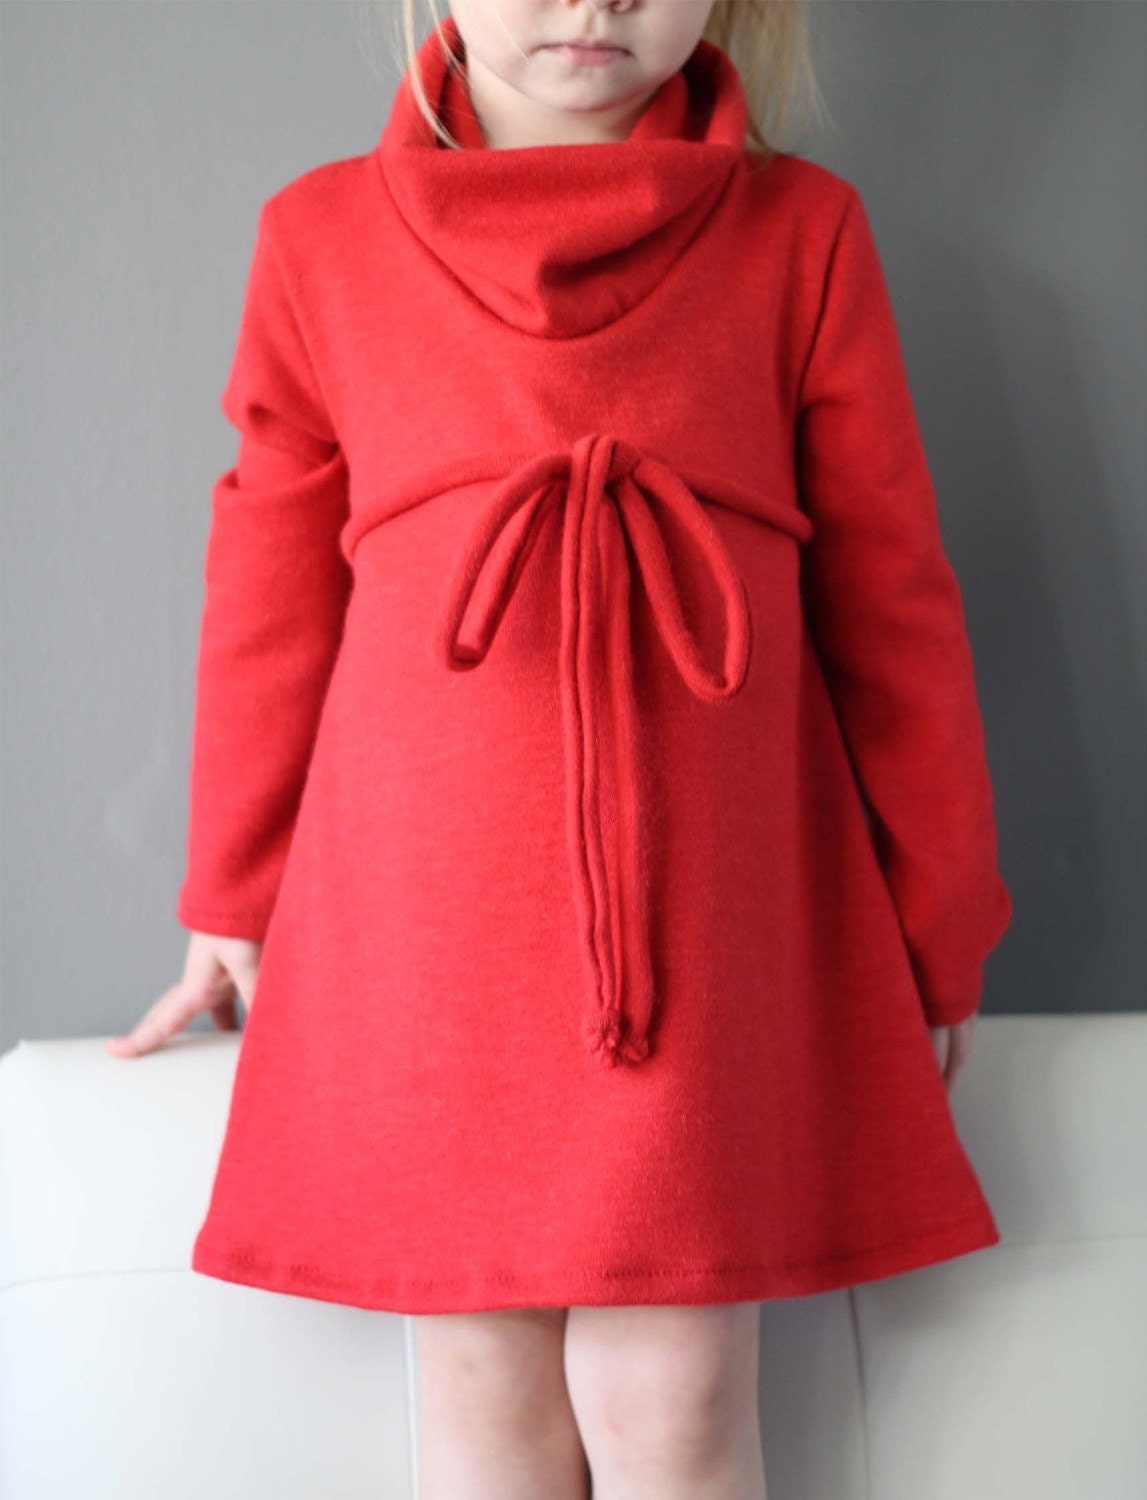 New Cowl Neck Jumper Dress pattern and tutorial PDF 12m-6T EASY SEW tunic dress sweater